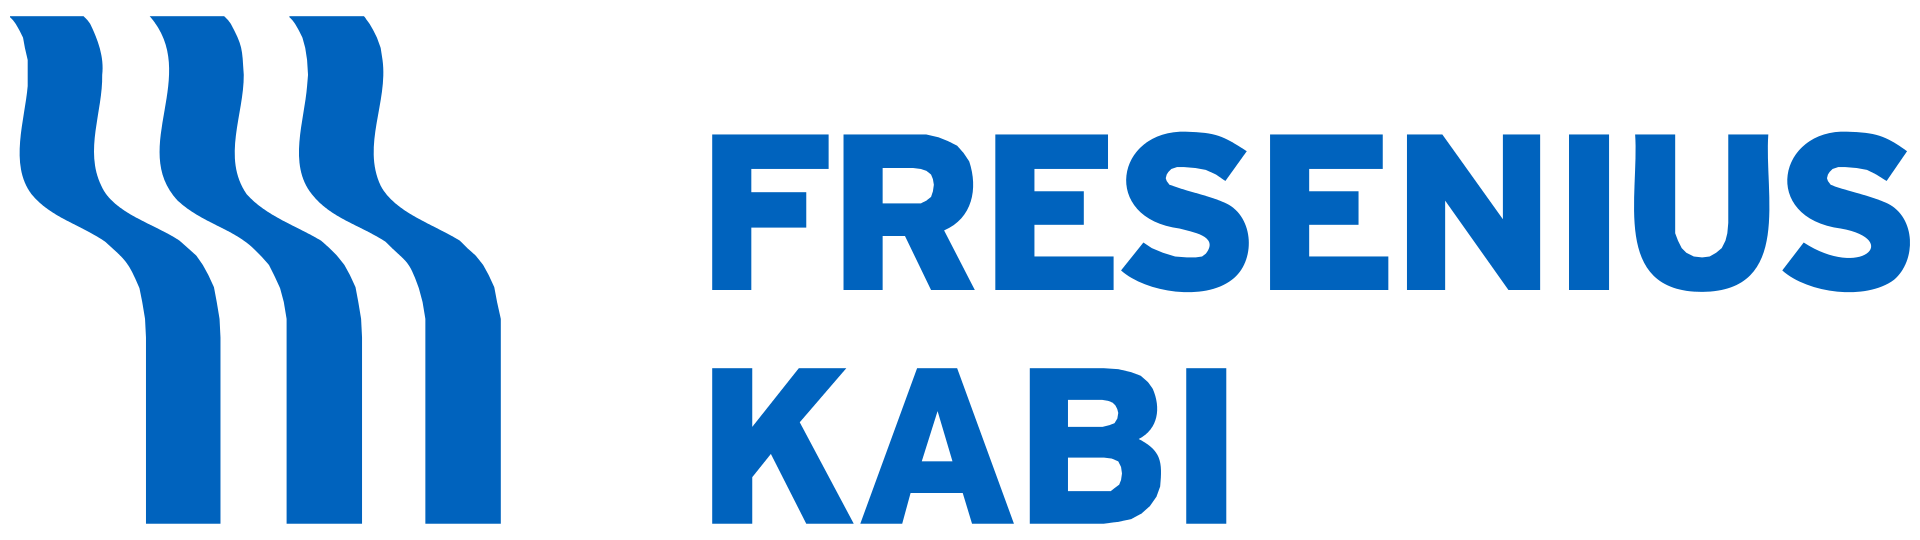 Fresenius_Kabi